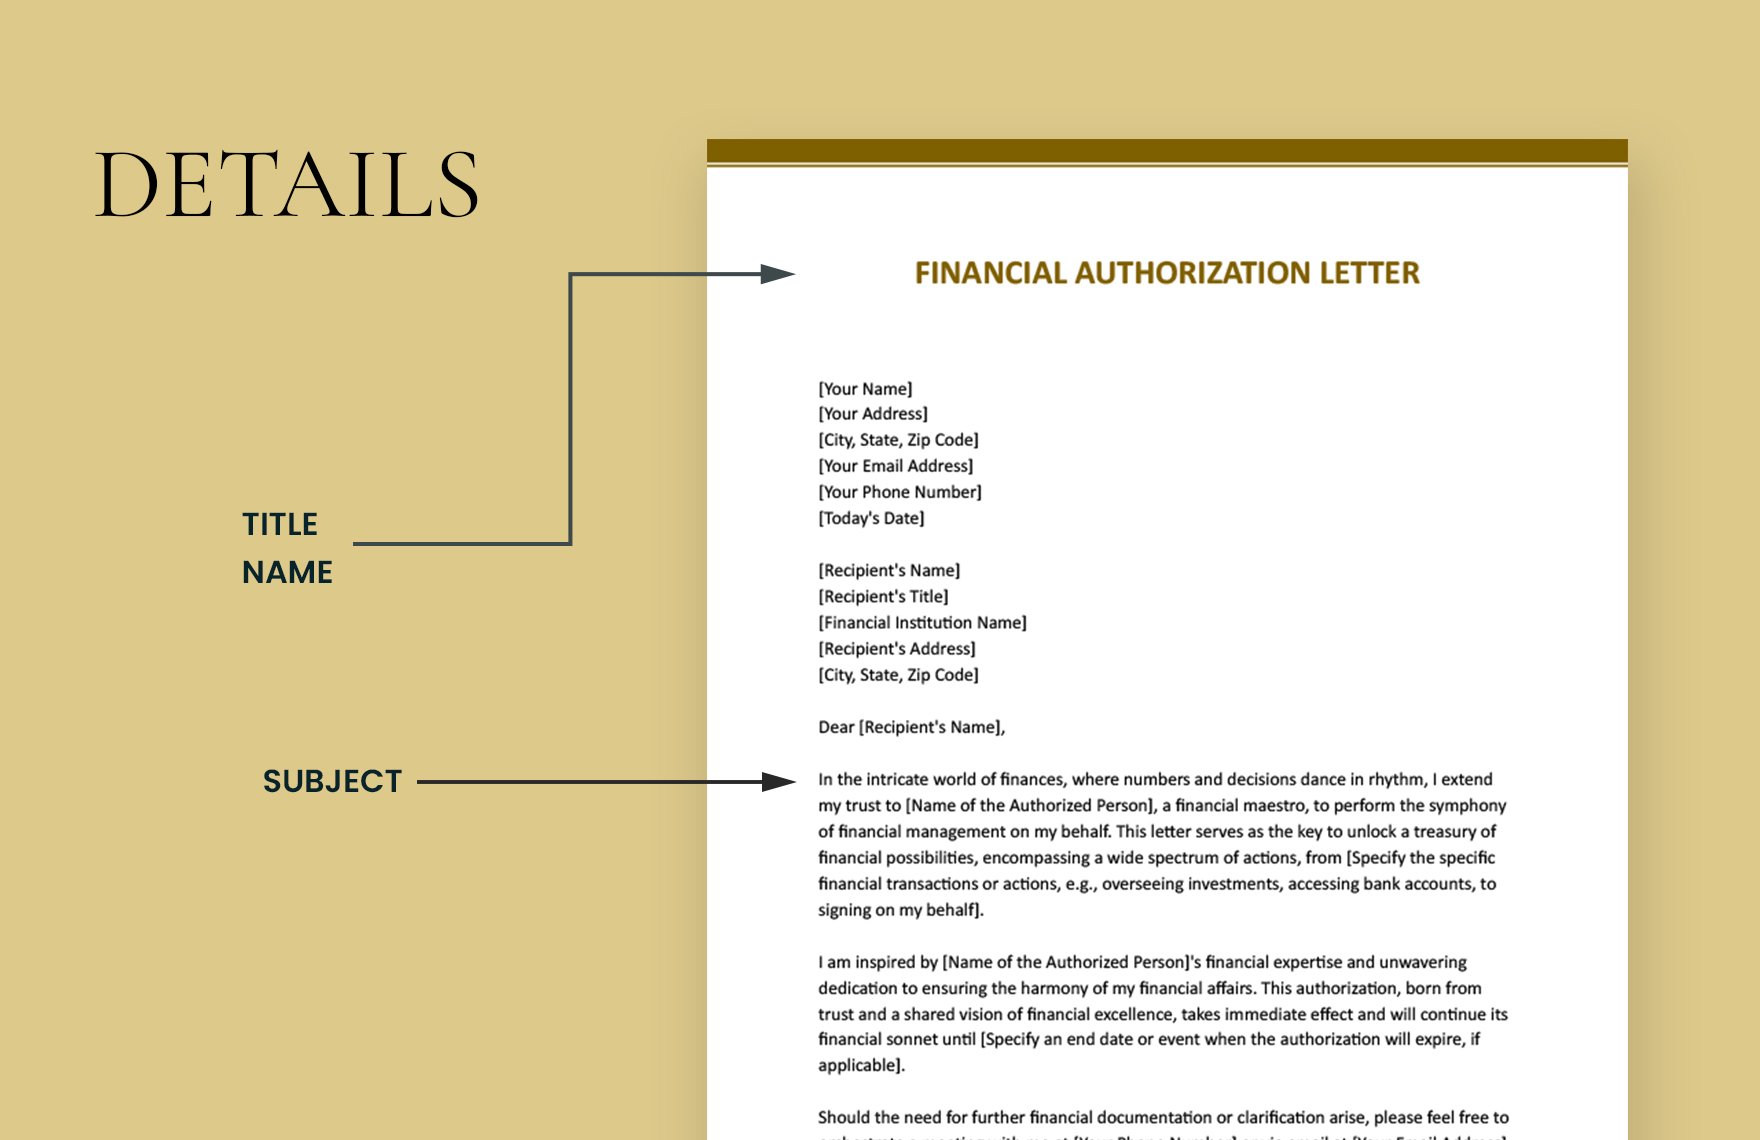 Financial Authorization Letter